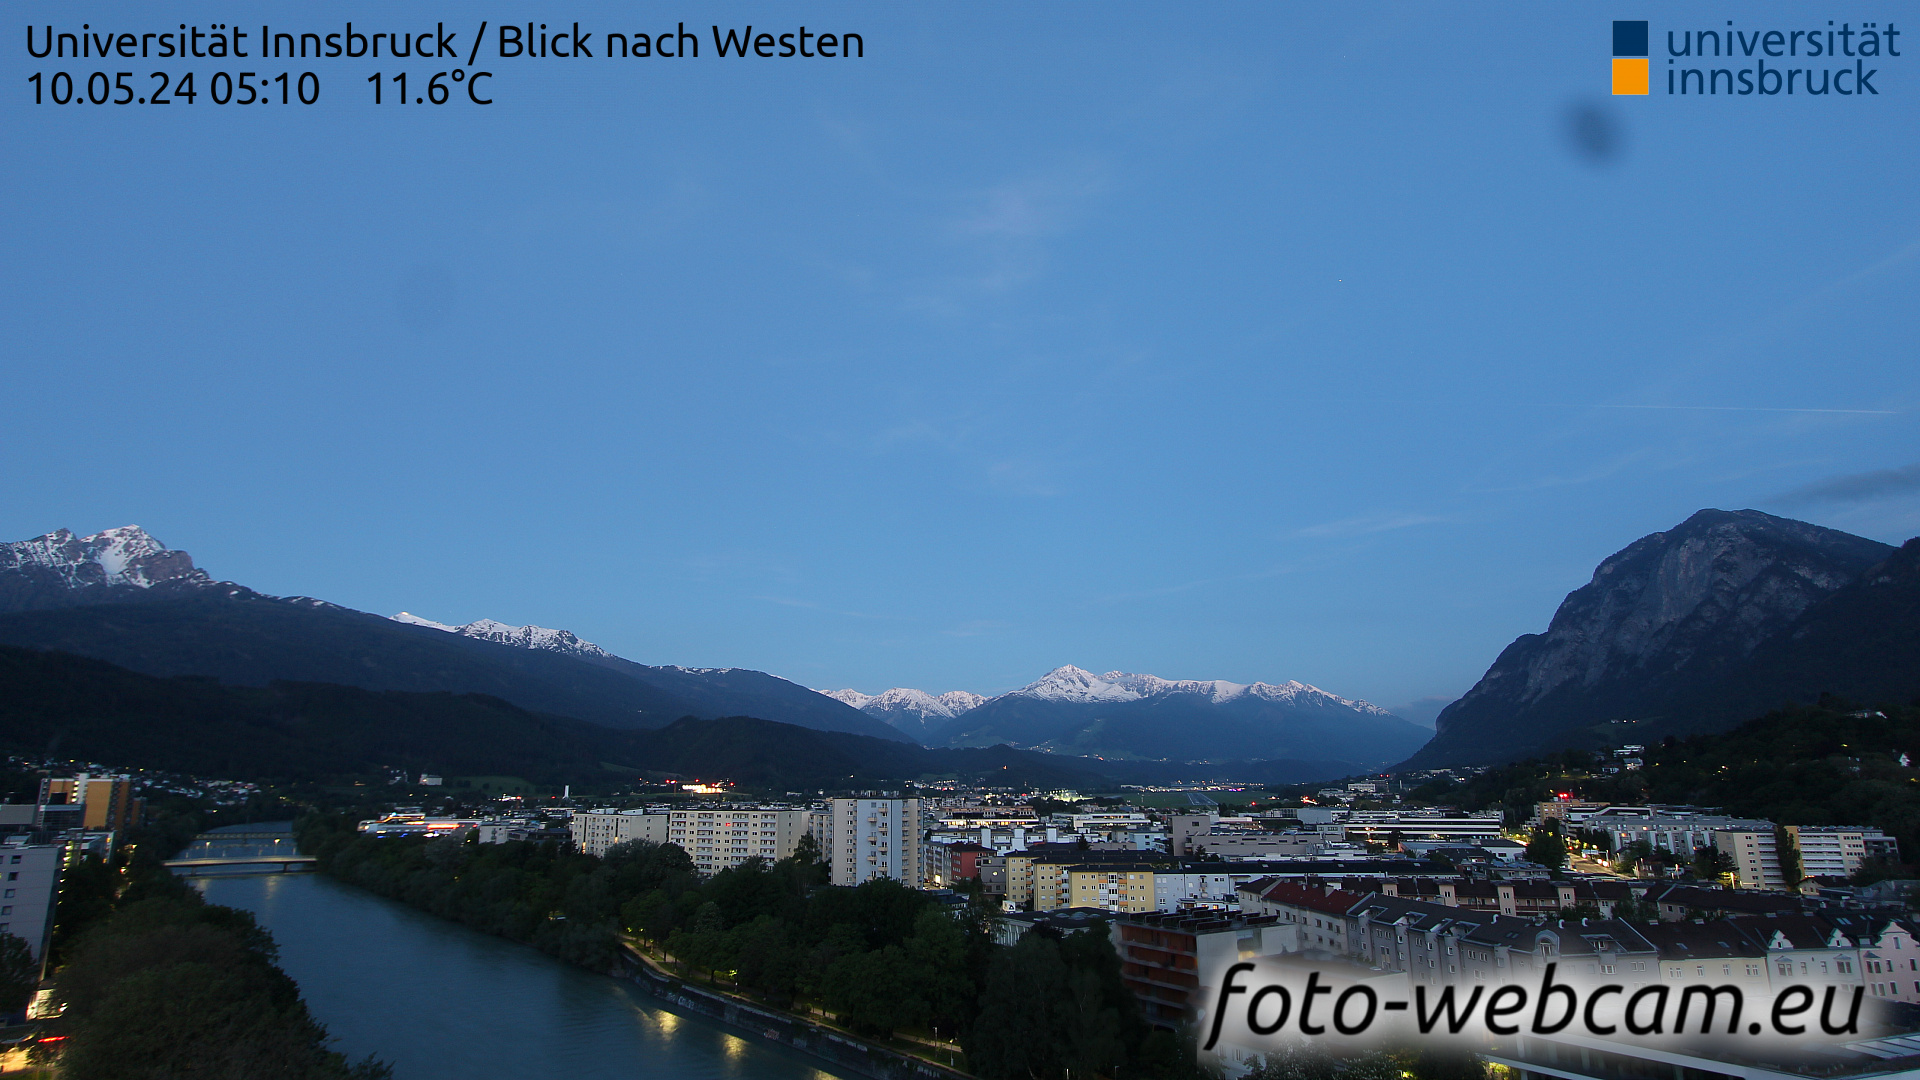 Innsbruck Fr. 05:17